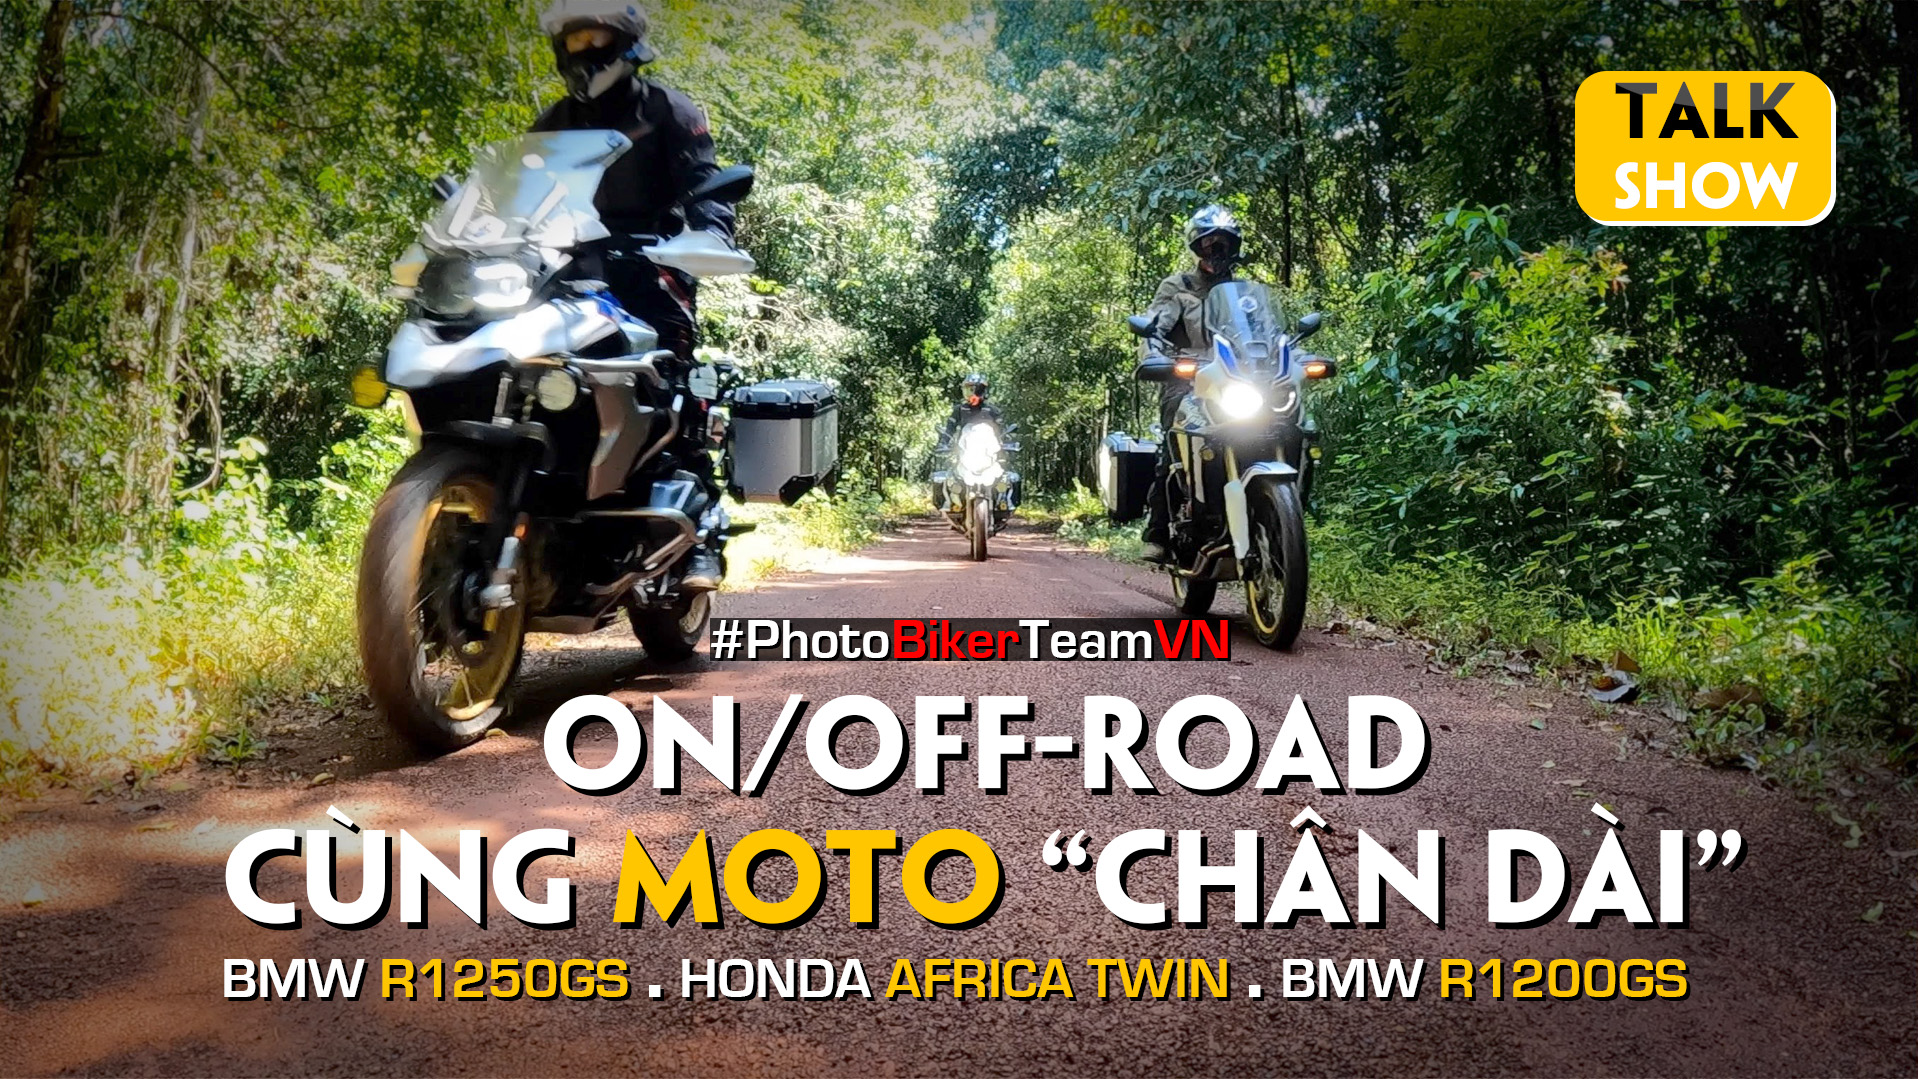 [Video] ONROAD + OFFROAD CÙNG MOTO "CHÂN DÀI" 1250GS 1200GS & AFRICA TWIN | Talkshow #2 - 2021